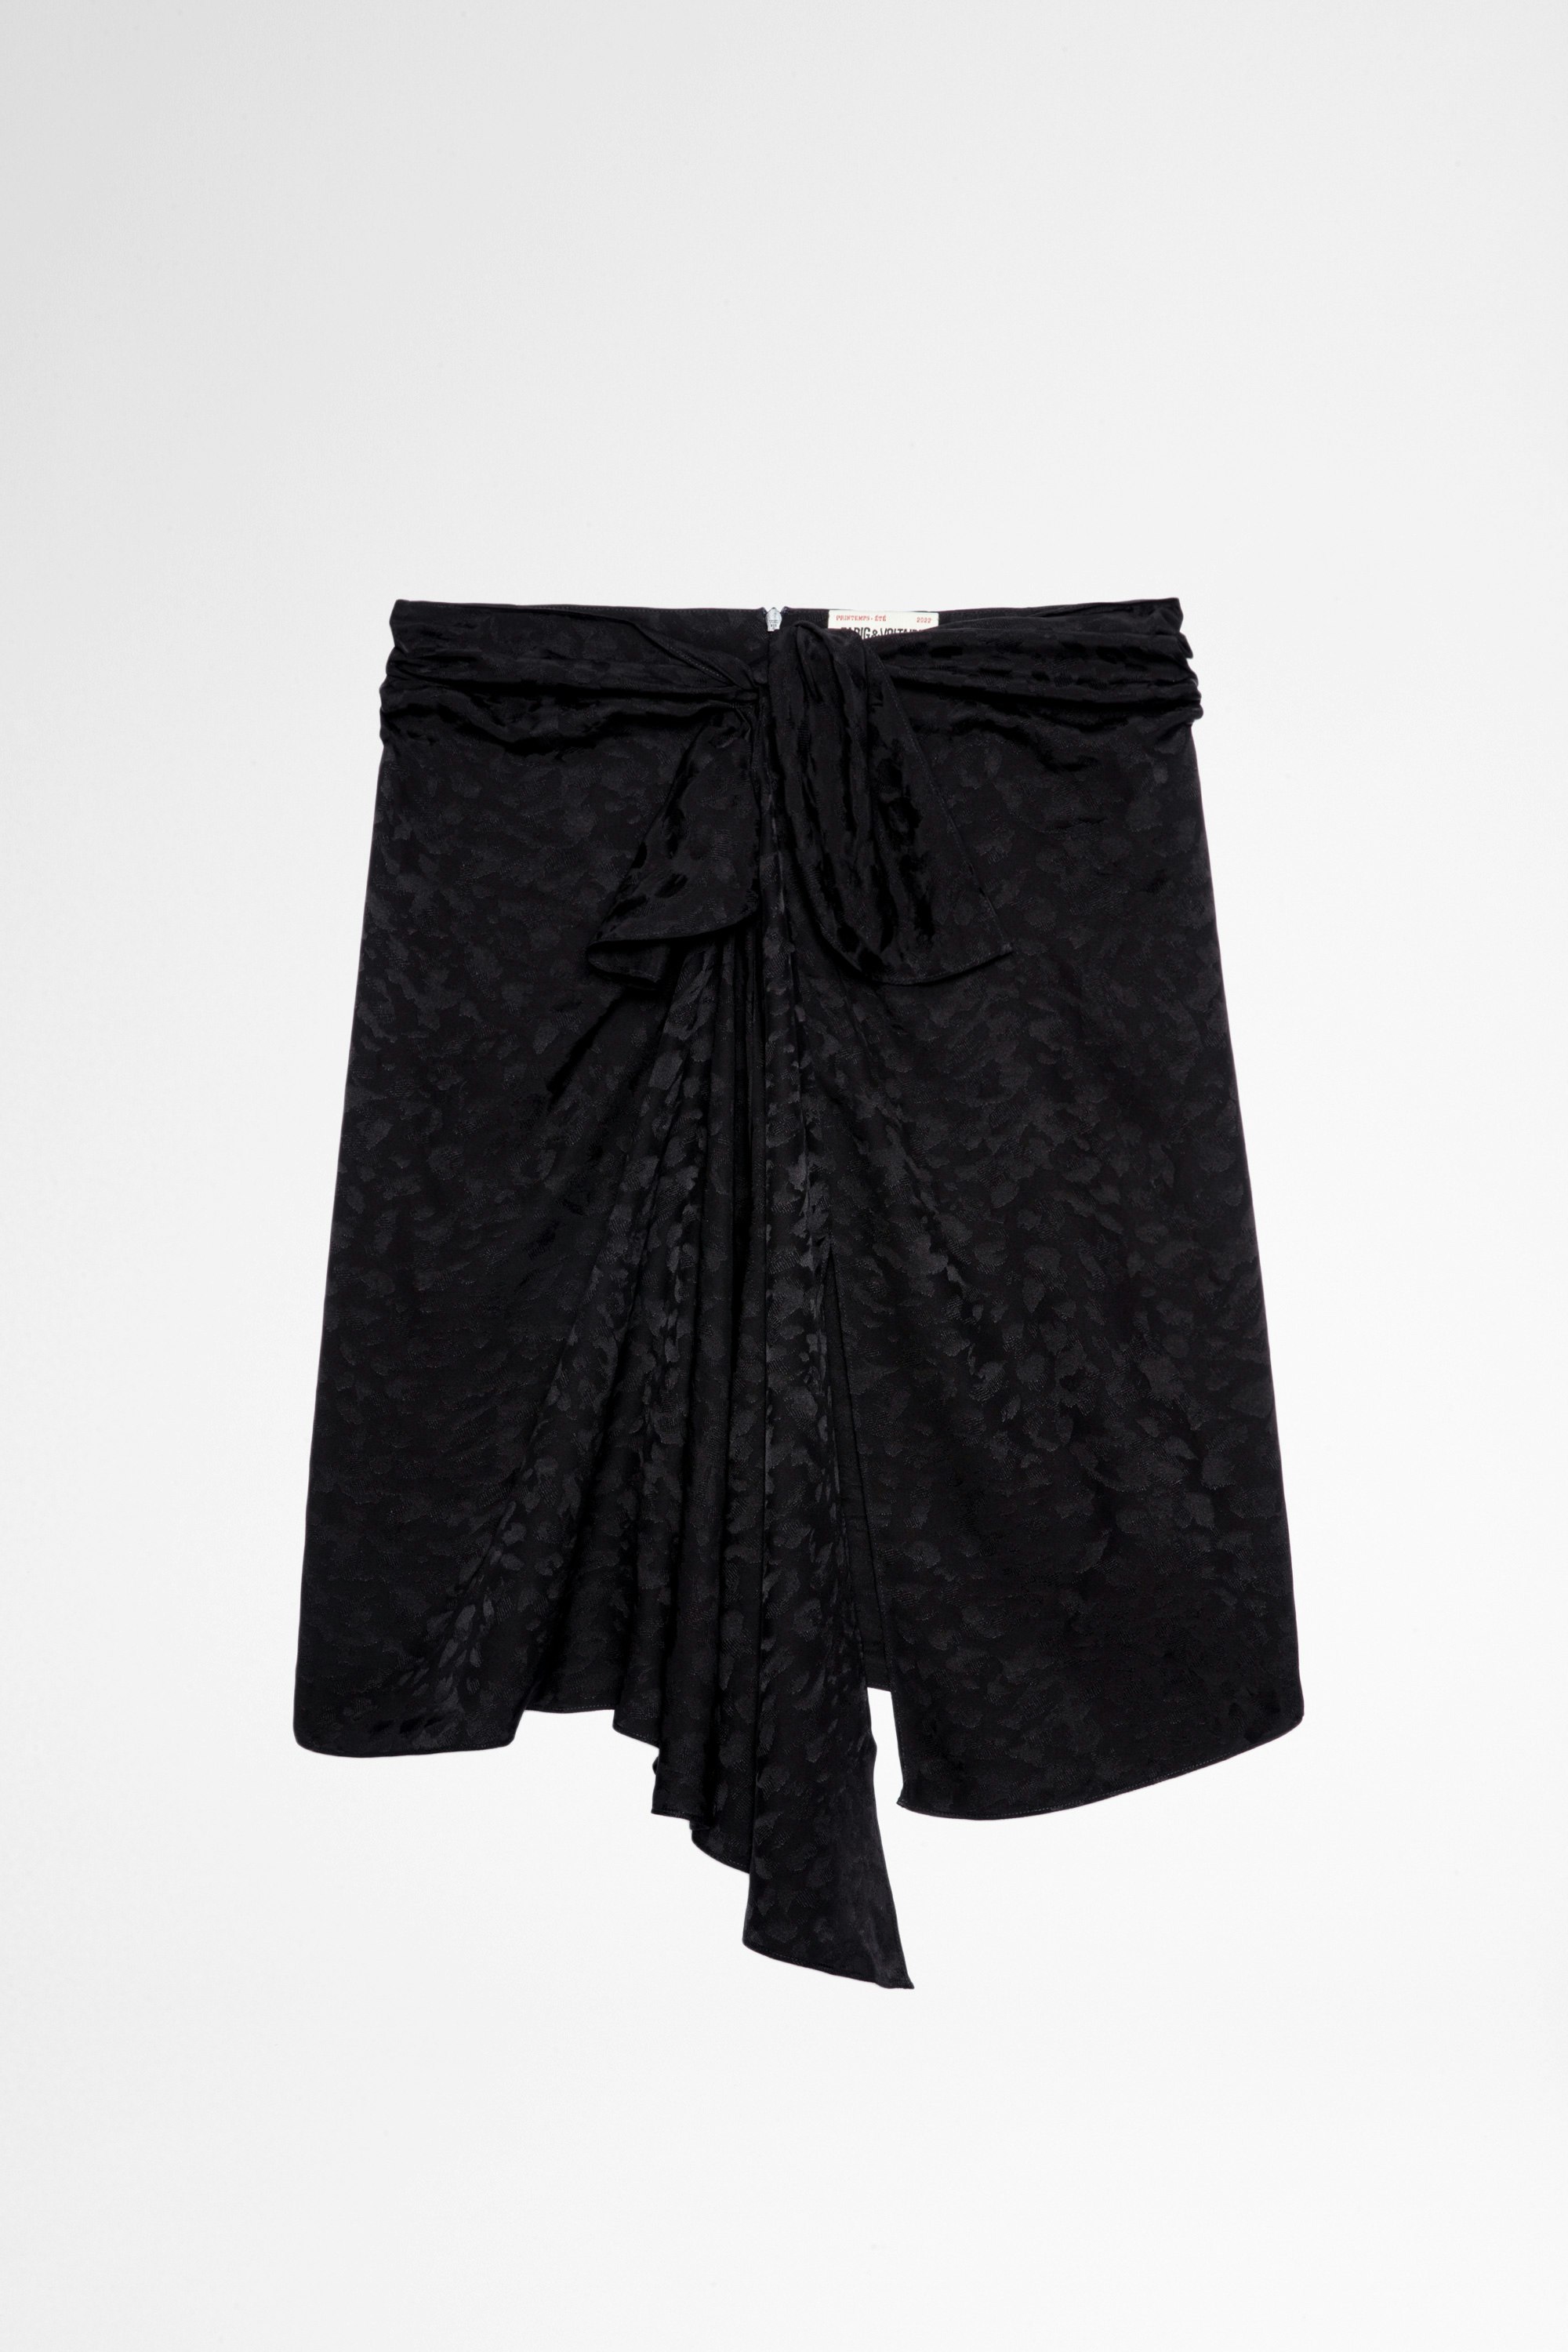 Jana シルクスカート Women's black draped and knotted silk skirt